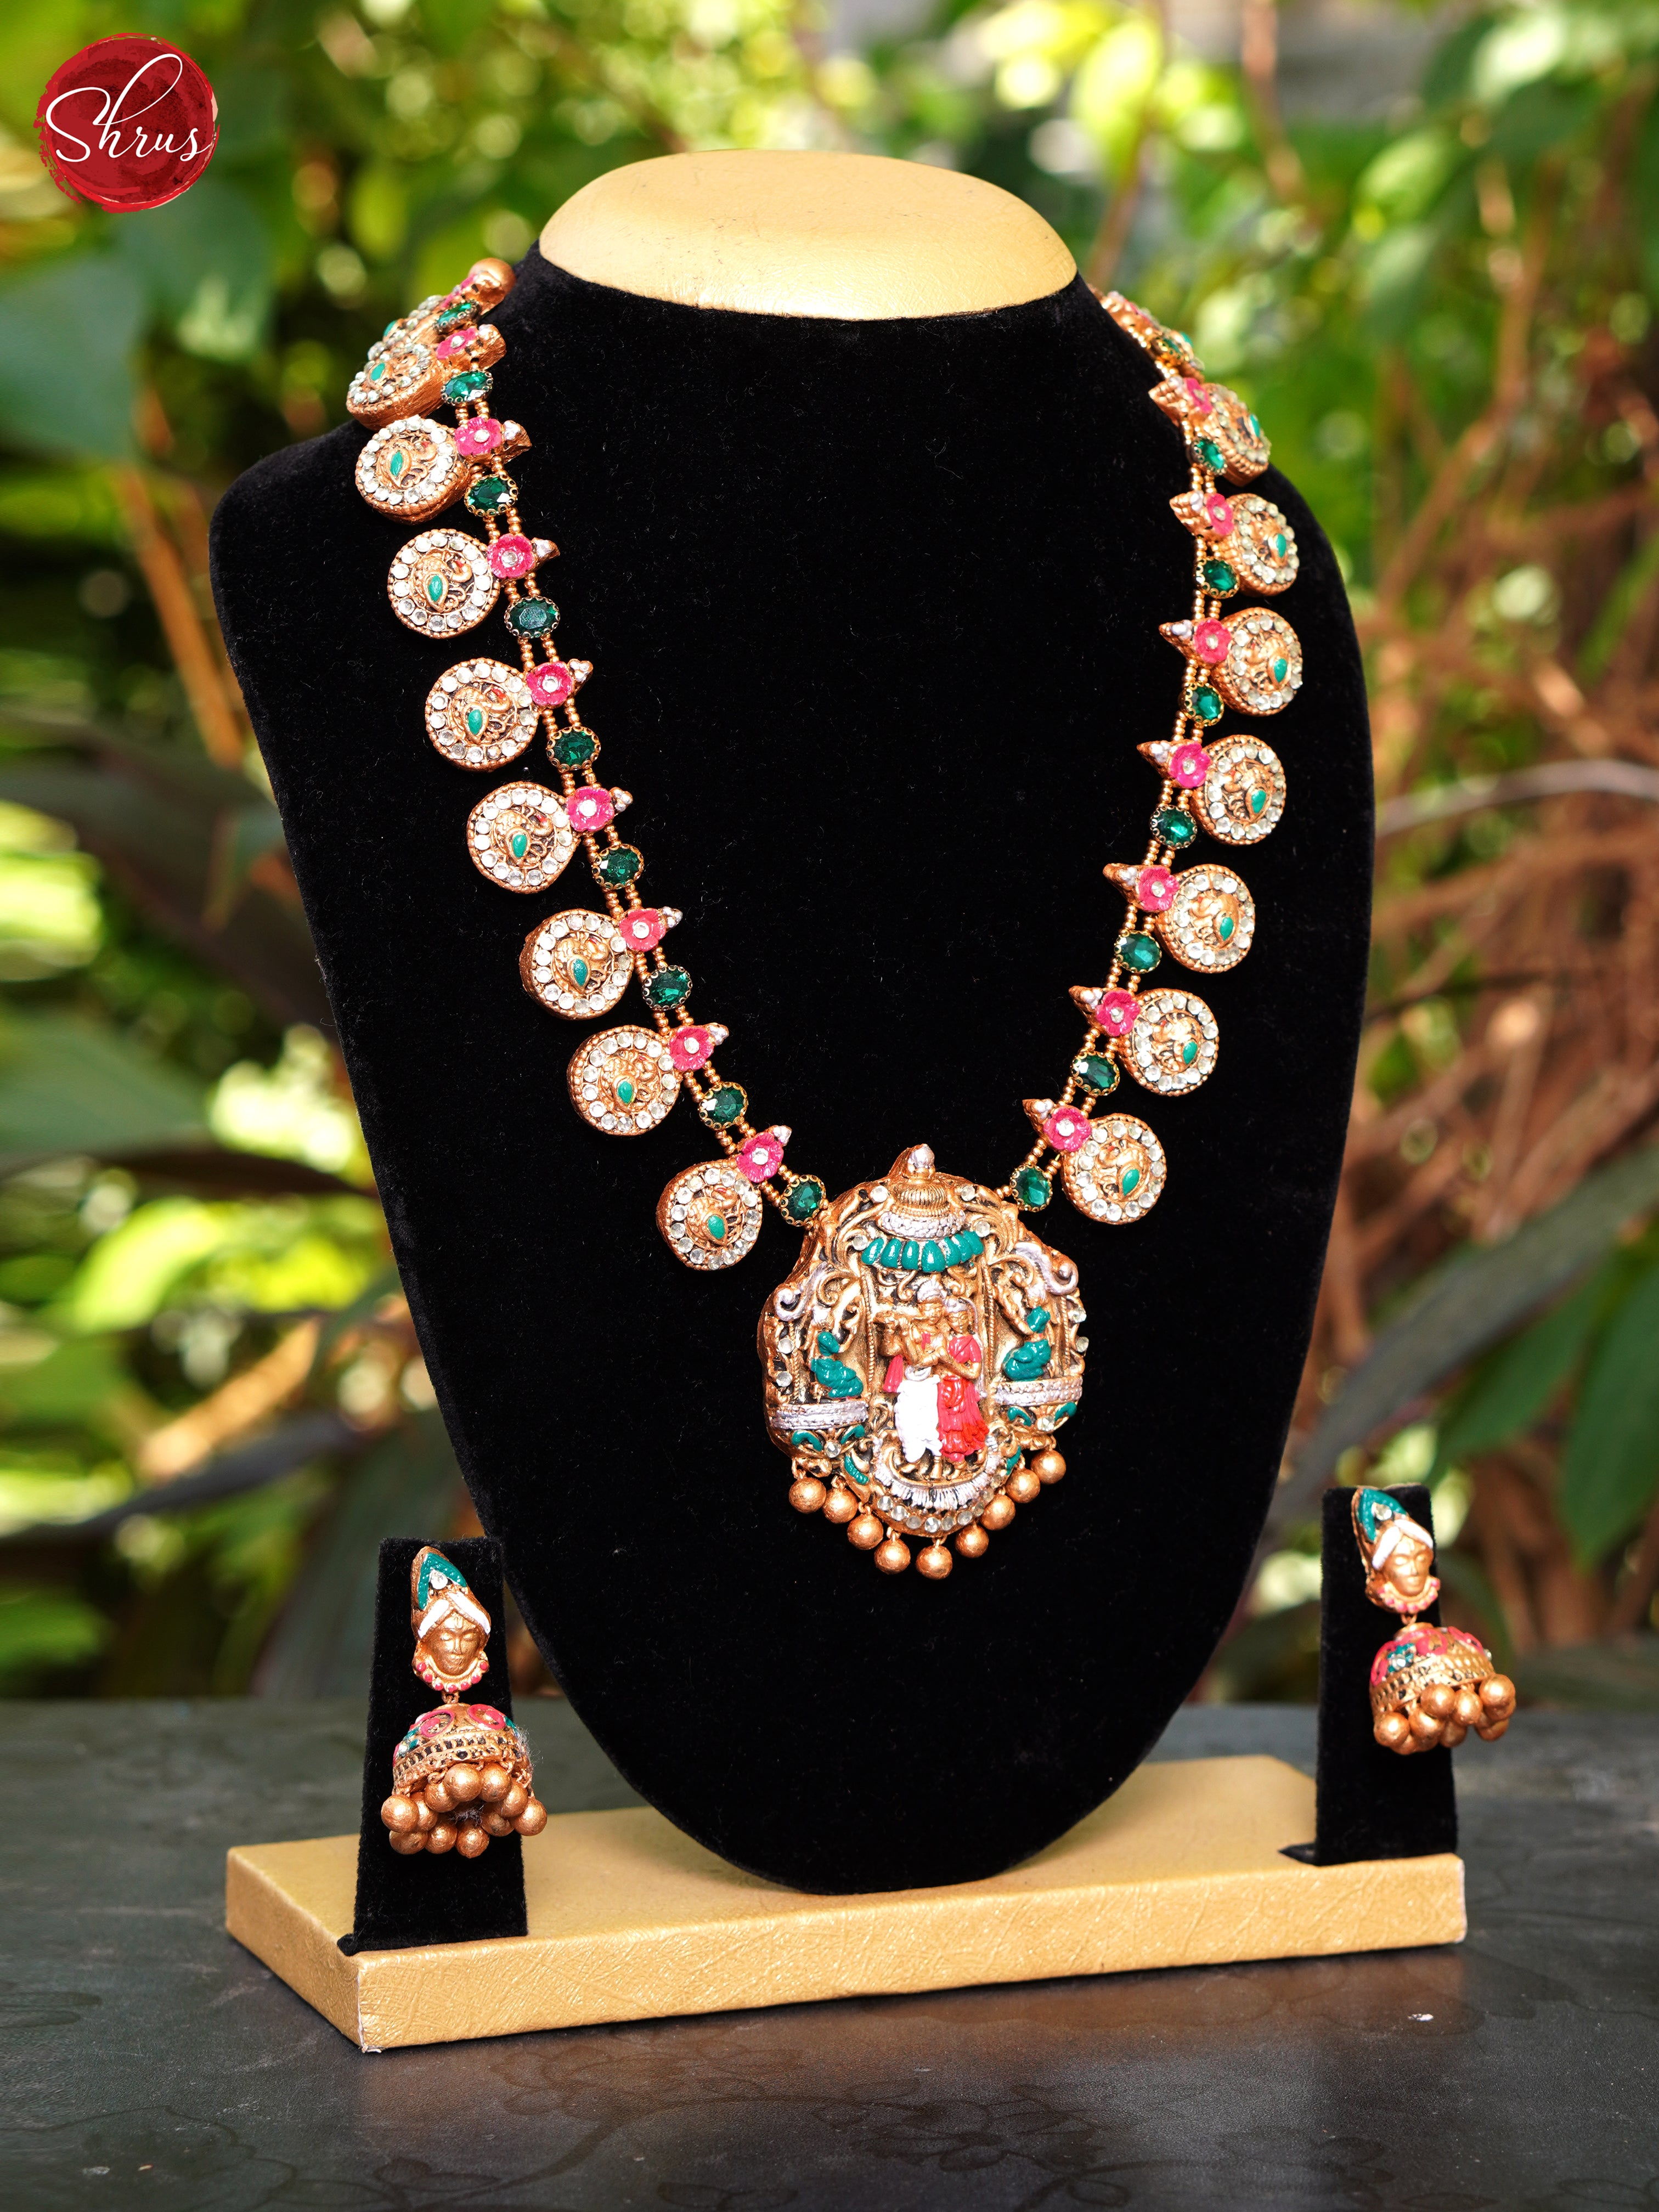 Handcrafted radhekrishna pendant terracotta necklace with jhumkas - Accessories - Shop on ShrusEternity.com